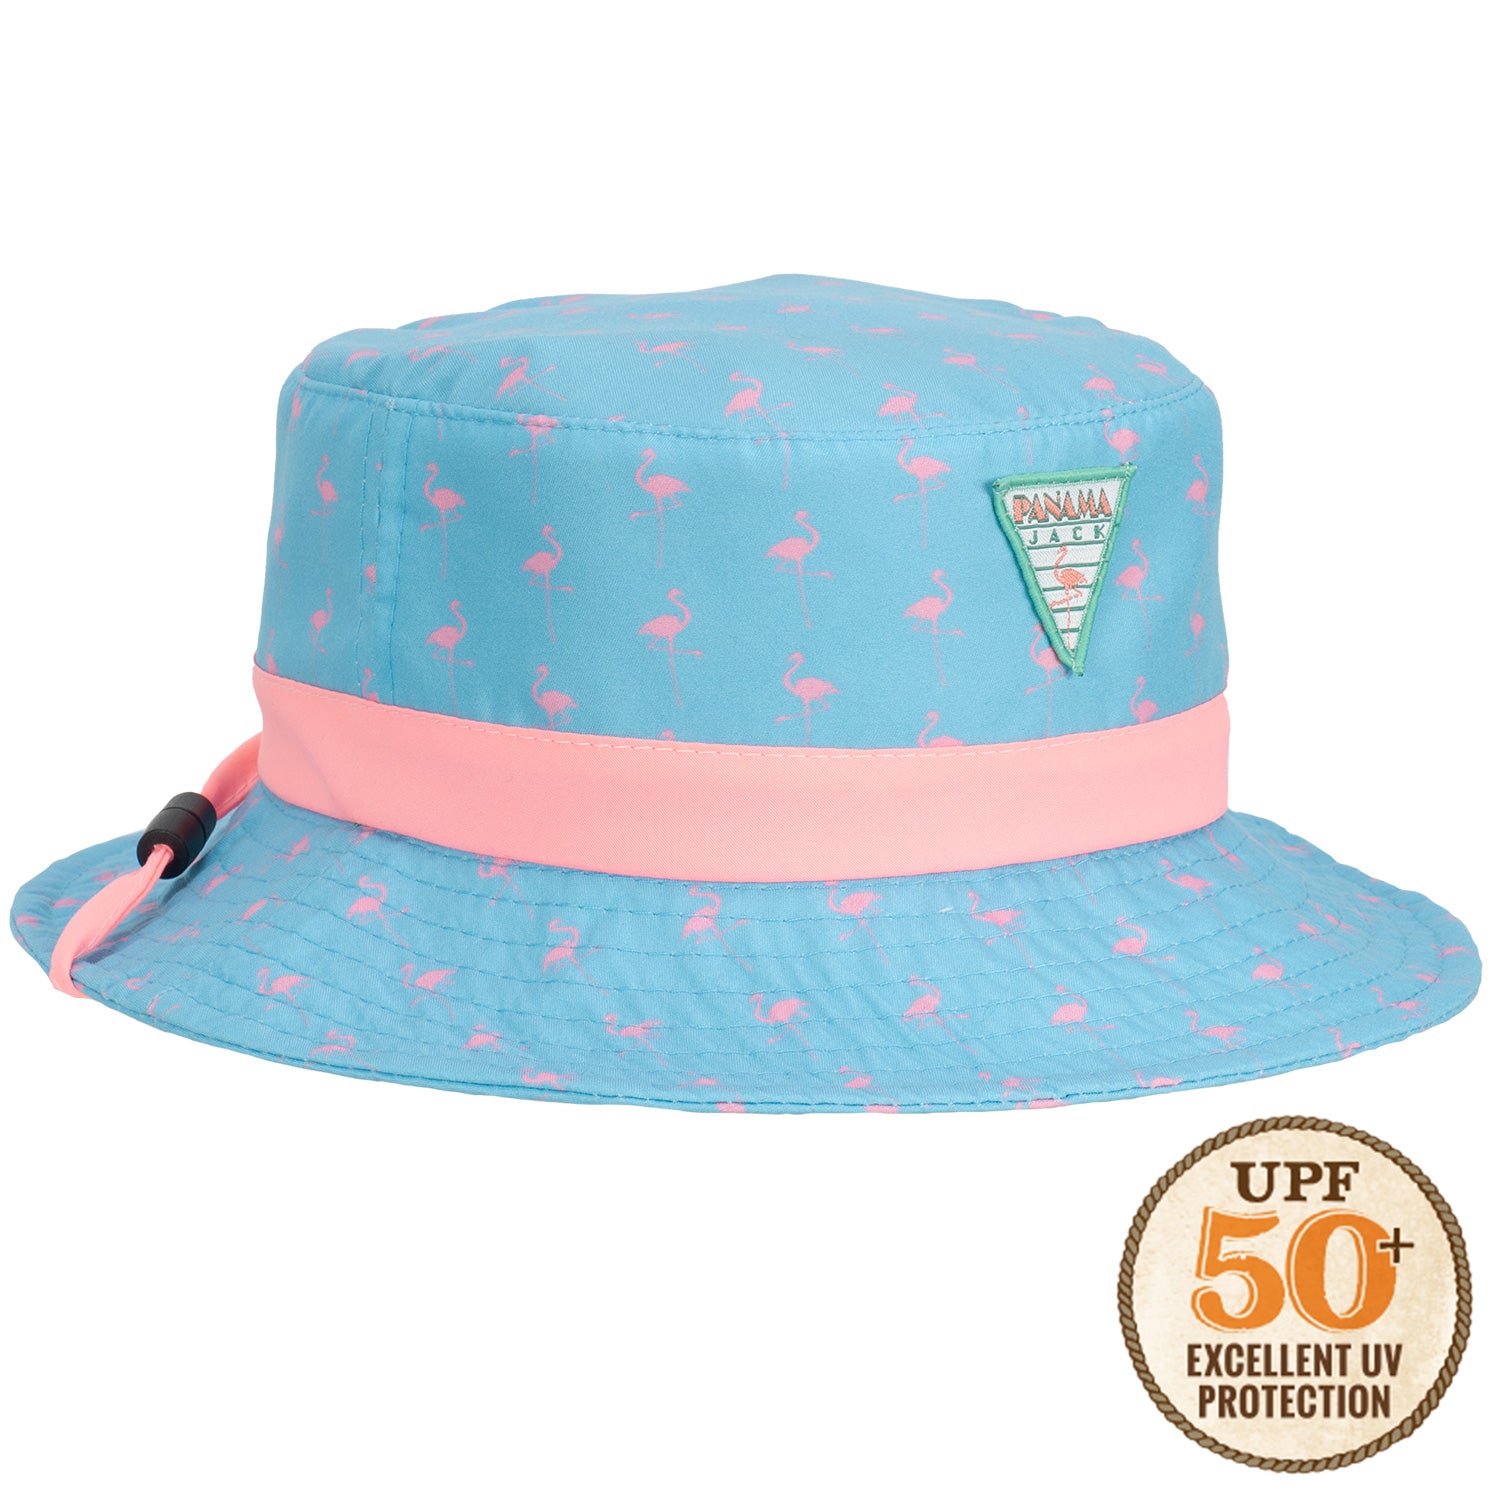 Panama Jack Kids Sun Hat - Flamingo Print, Adjustable Chin Cord, UPF (SPF) 50+ UVA/UVB Sun Protection, 2 Brim (Blue)